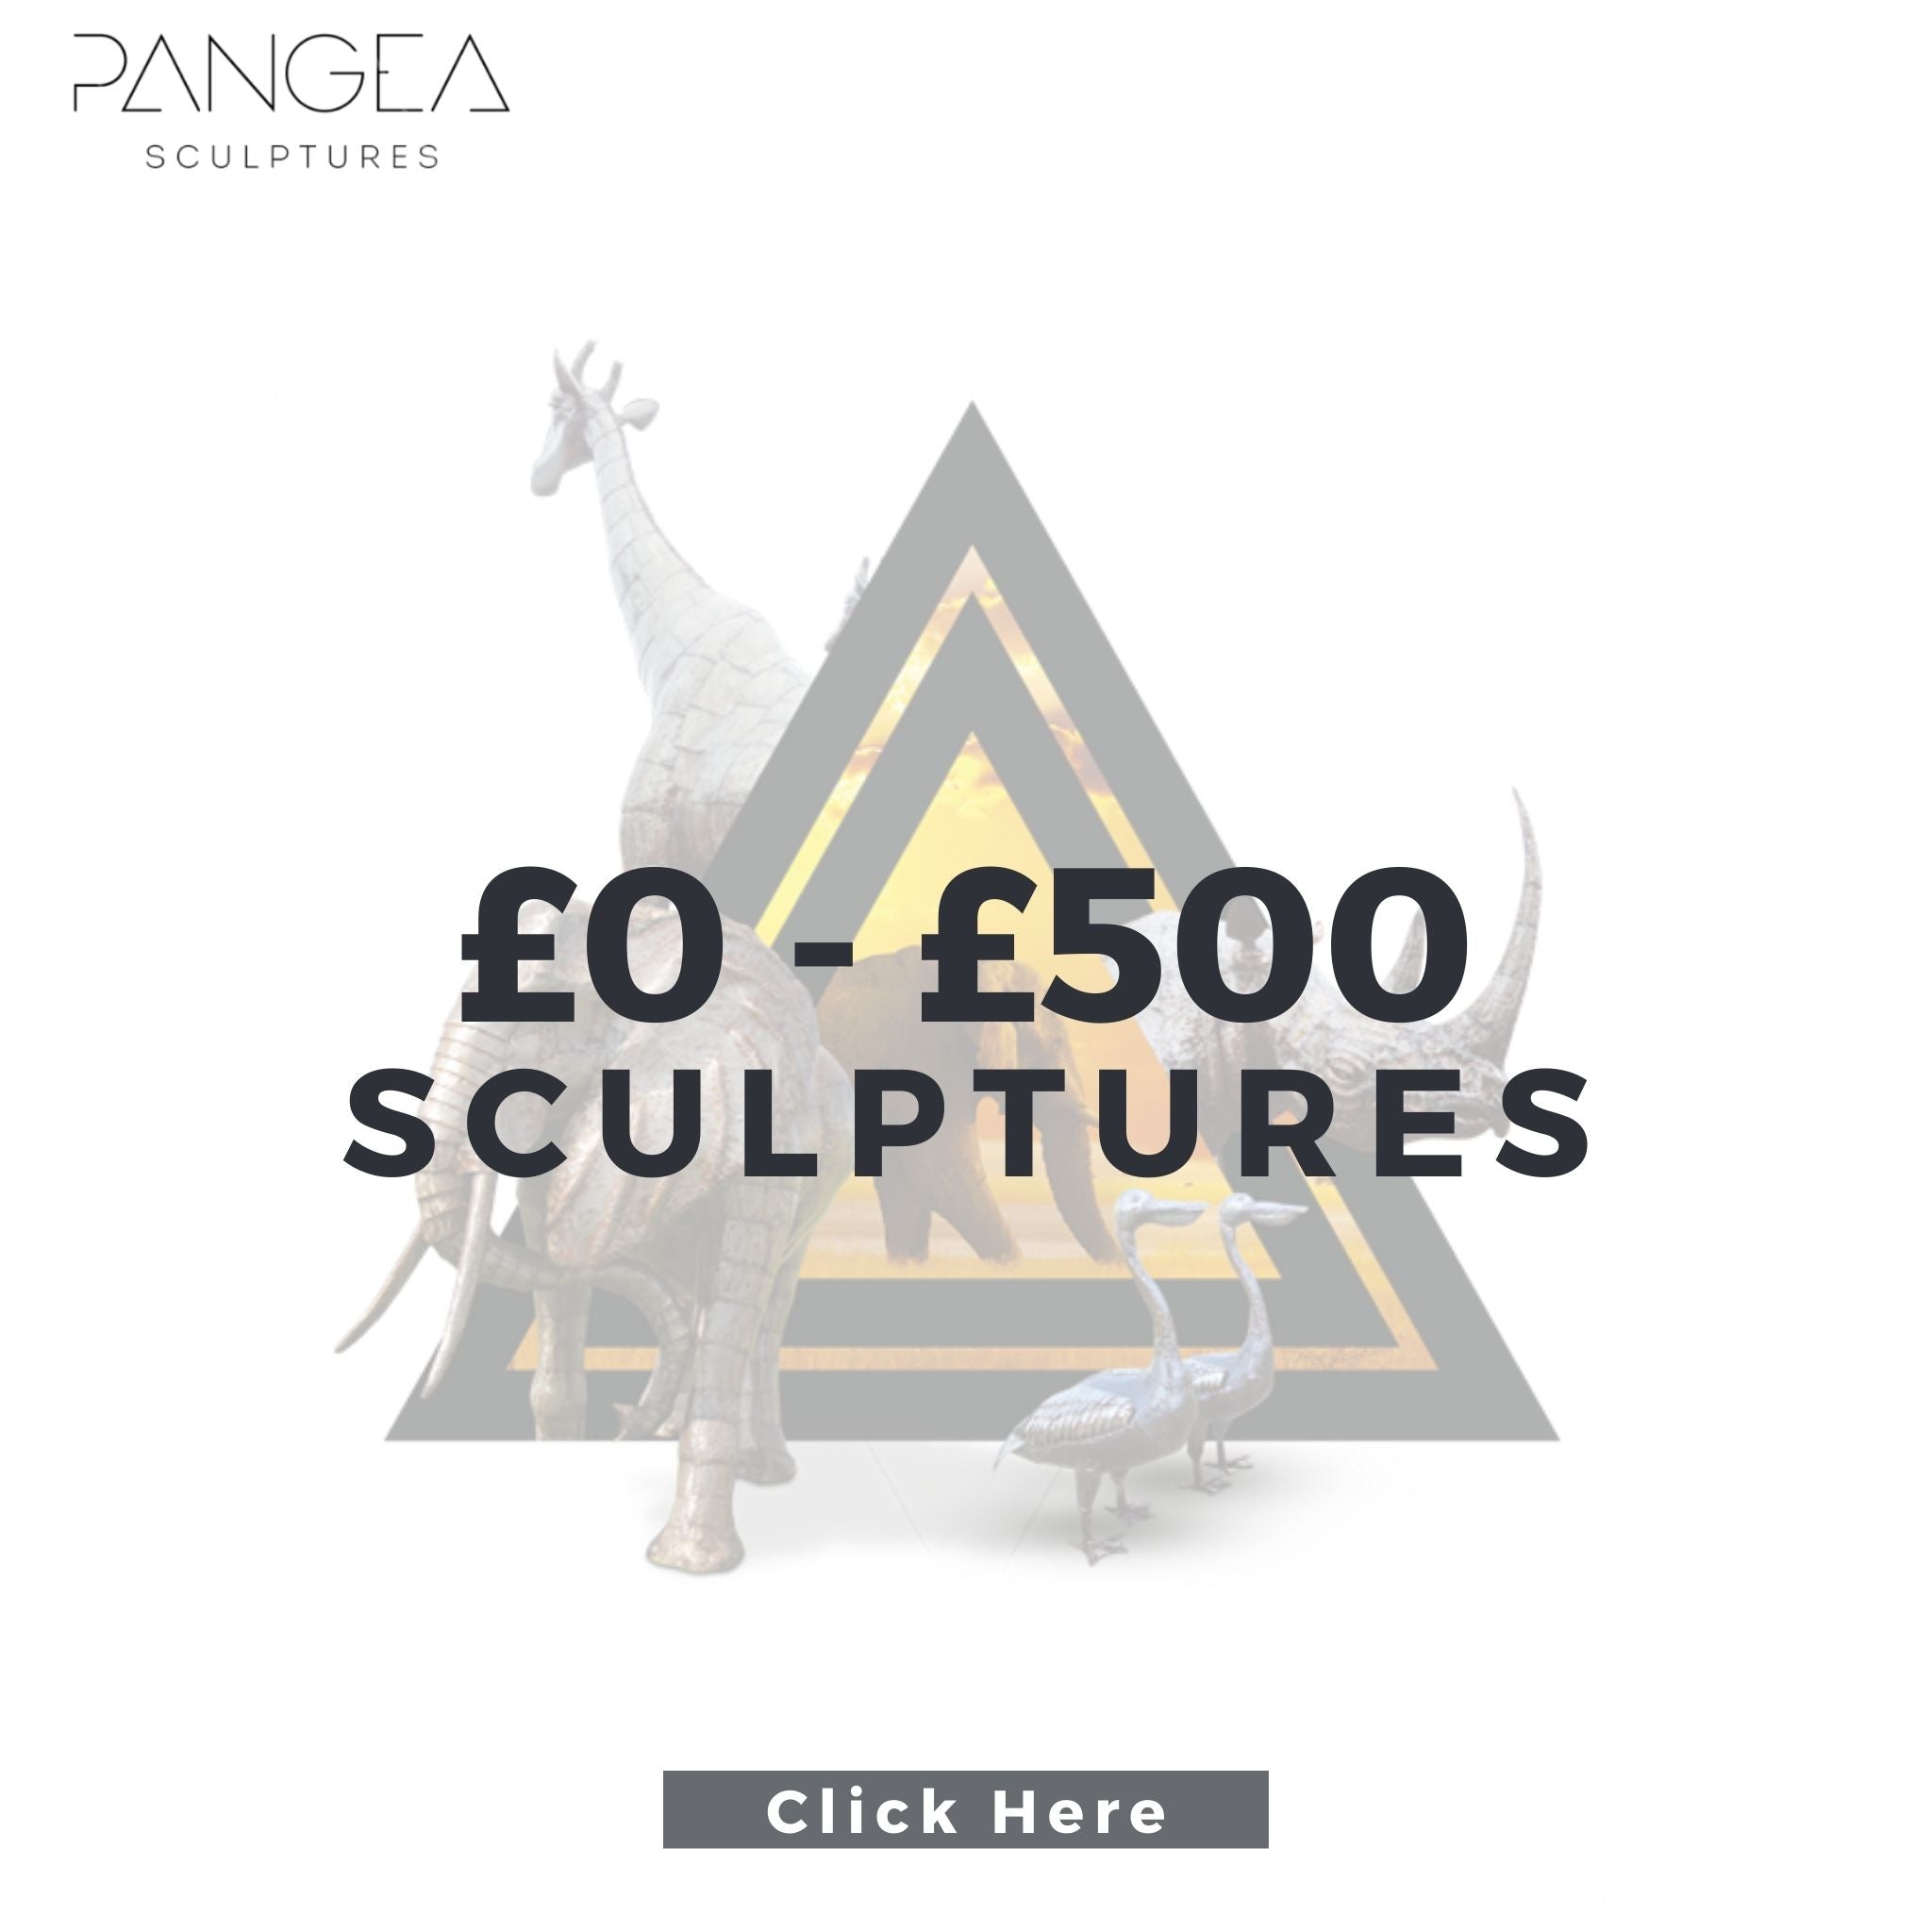 £0-£500 - Pangea Sculptures